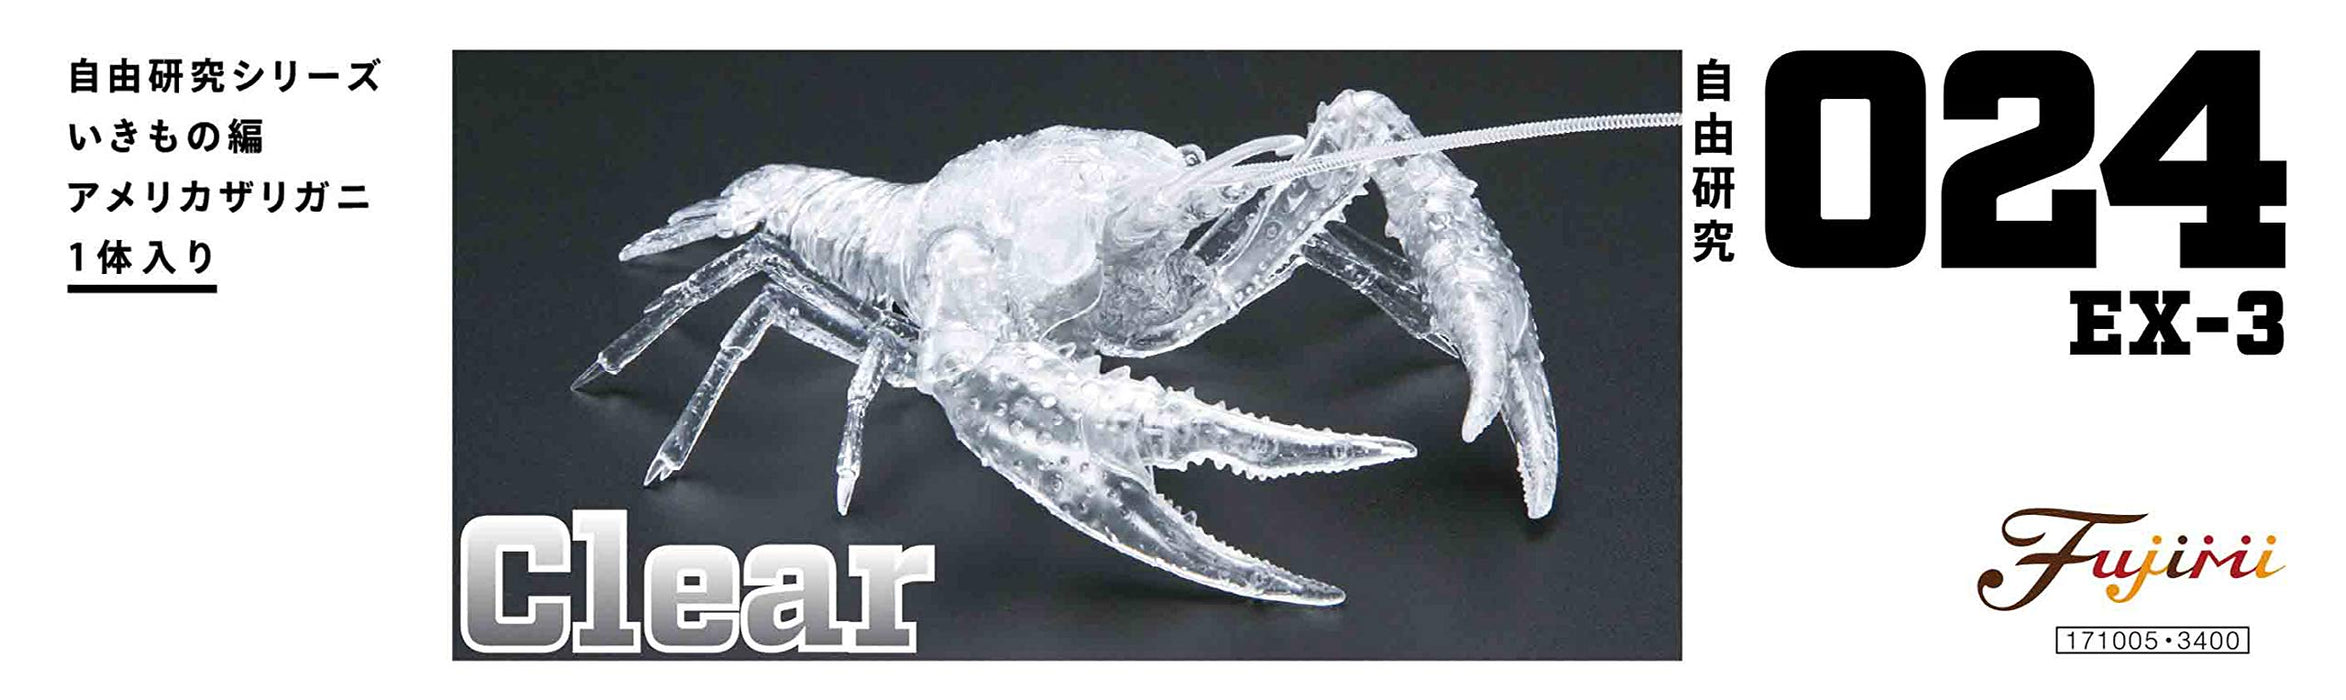 Fujimi Model Free Research Series No.24 EX-3 Creature Edition American Crayfish_3